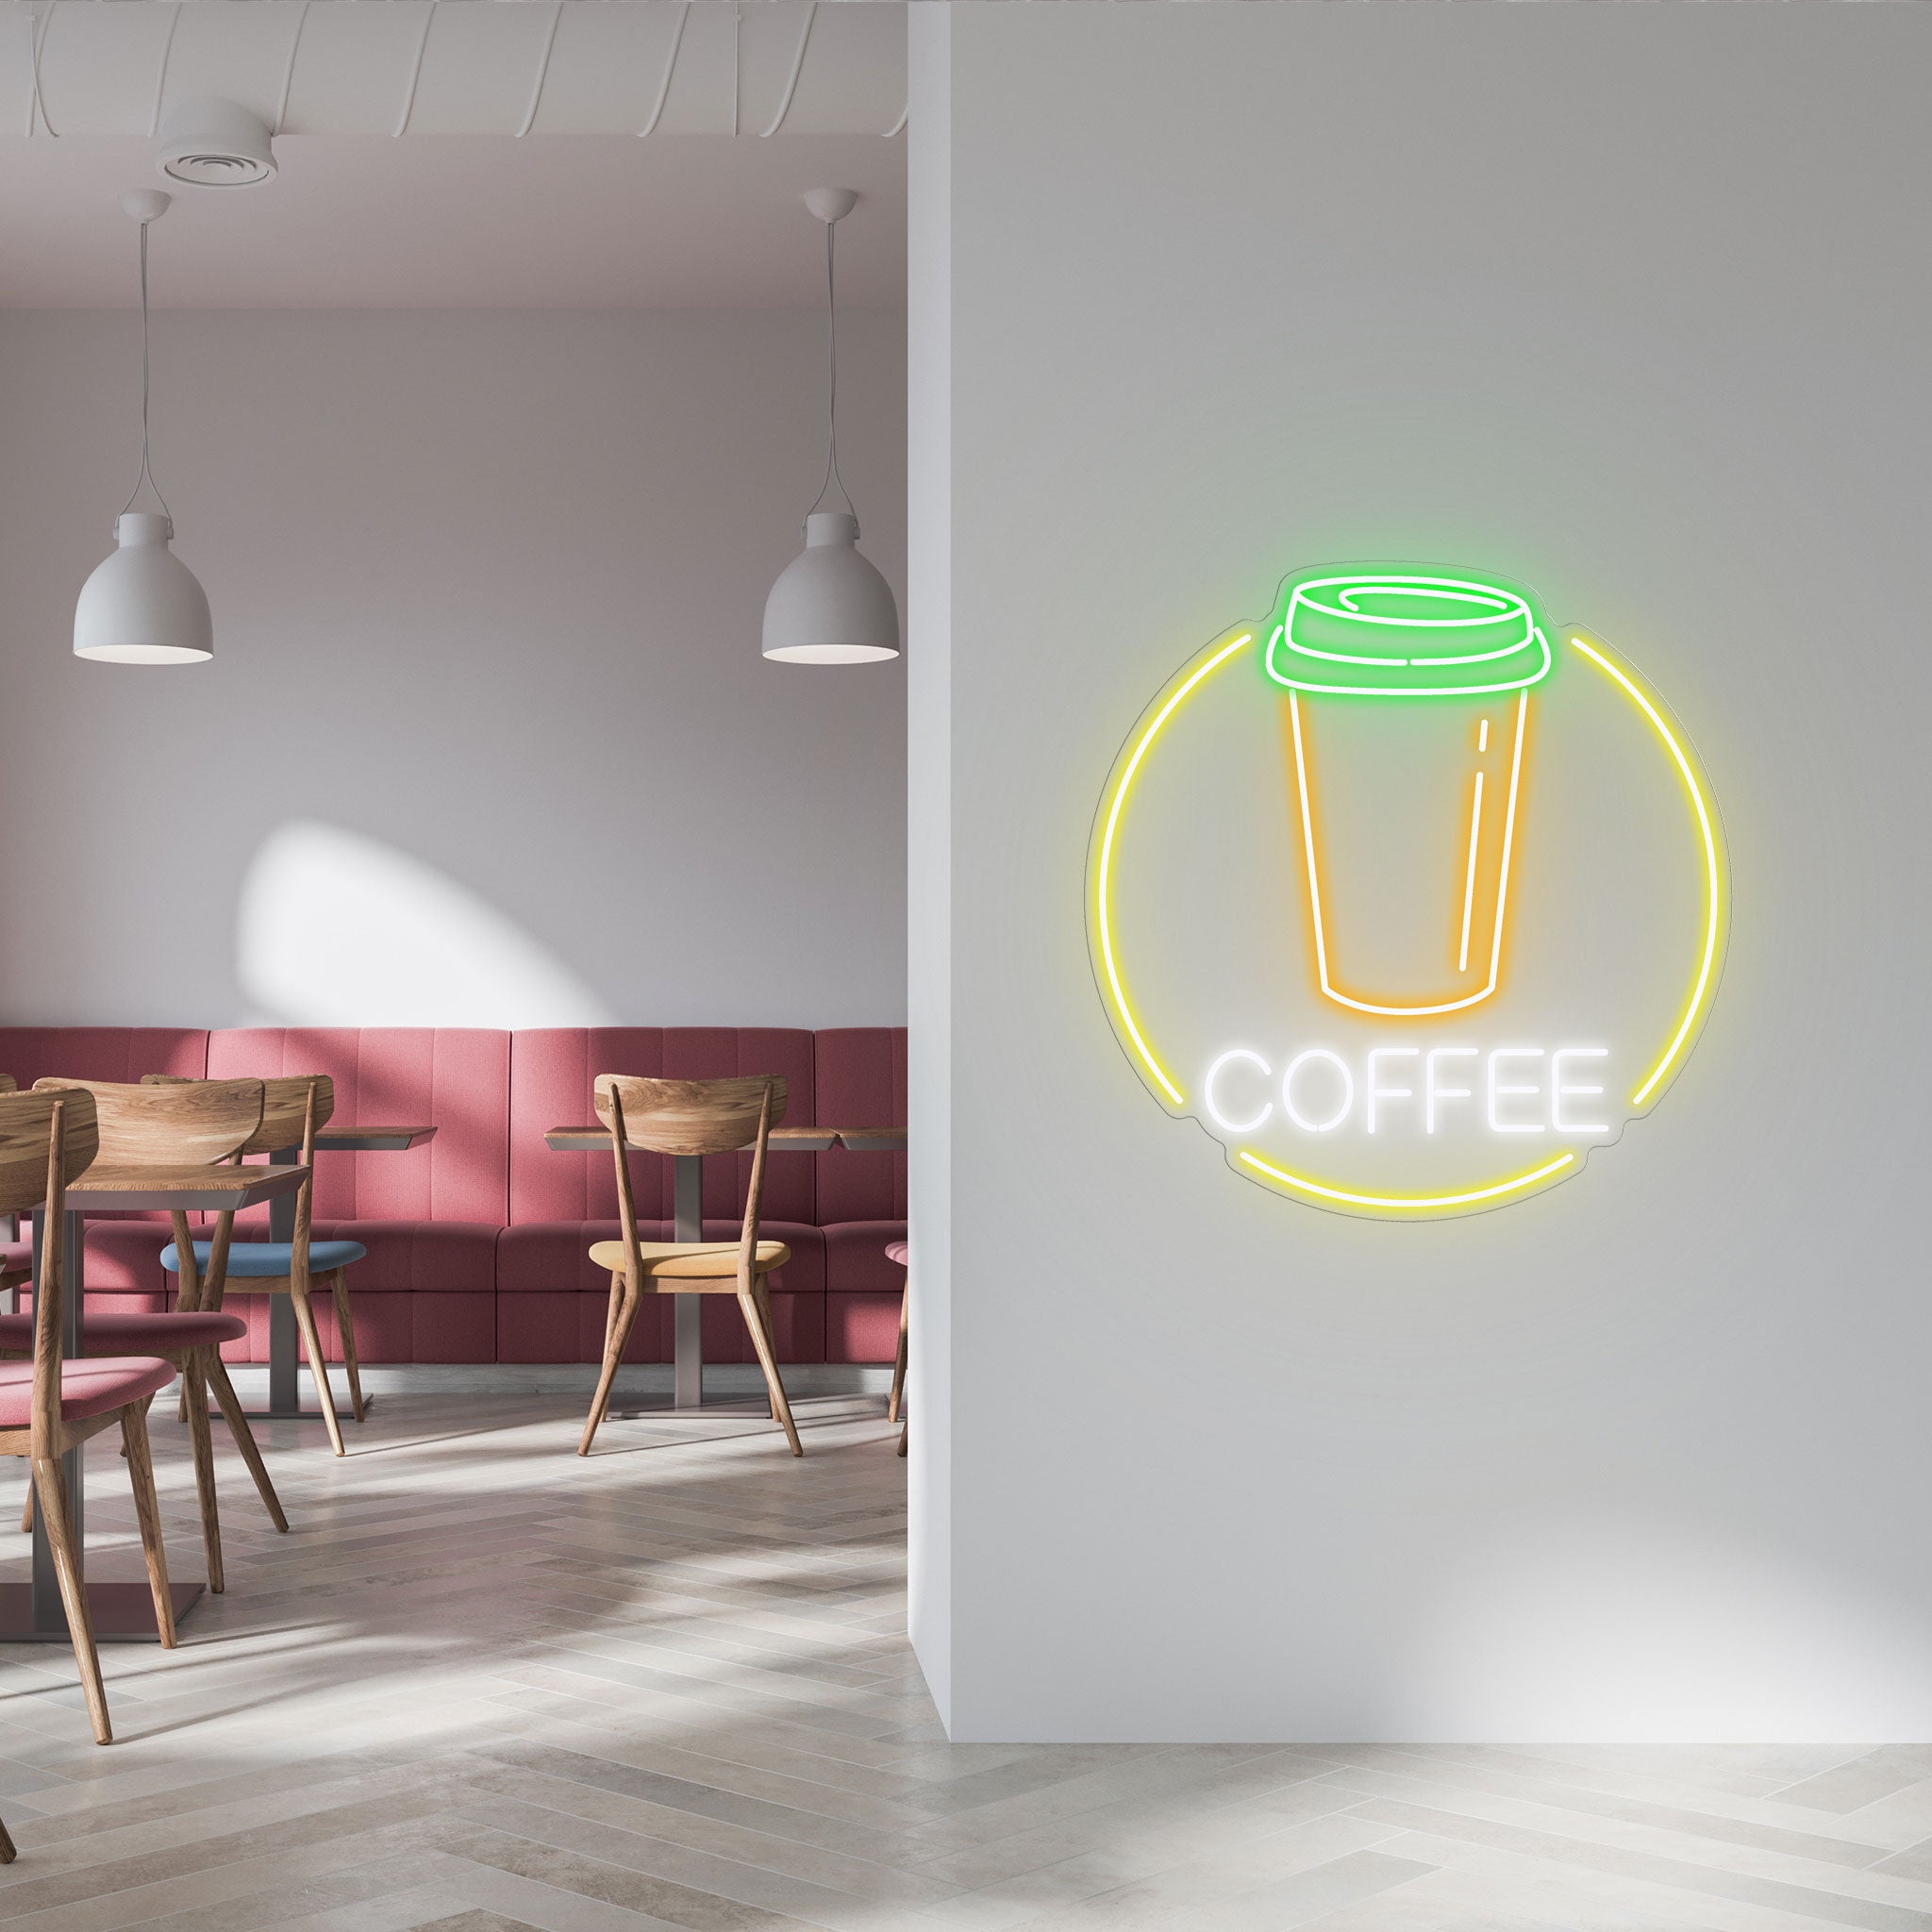 Take Away Coffee - Neon Sign - Café Venue